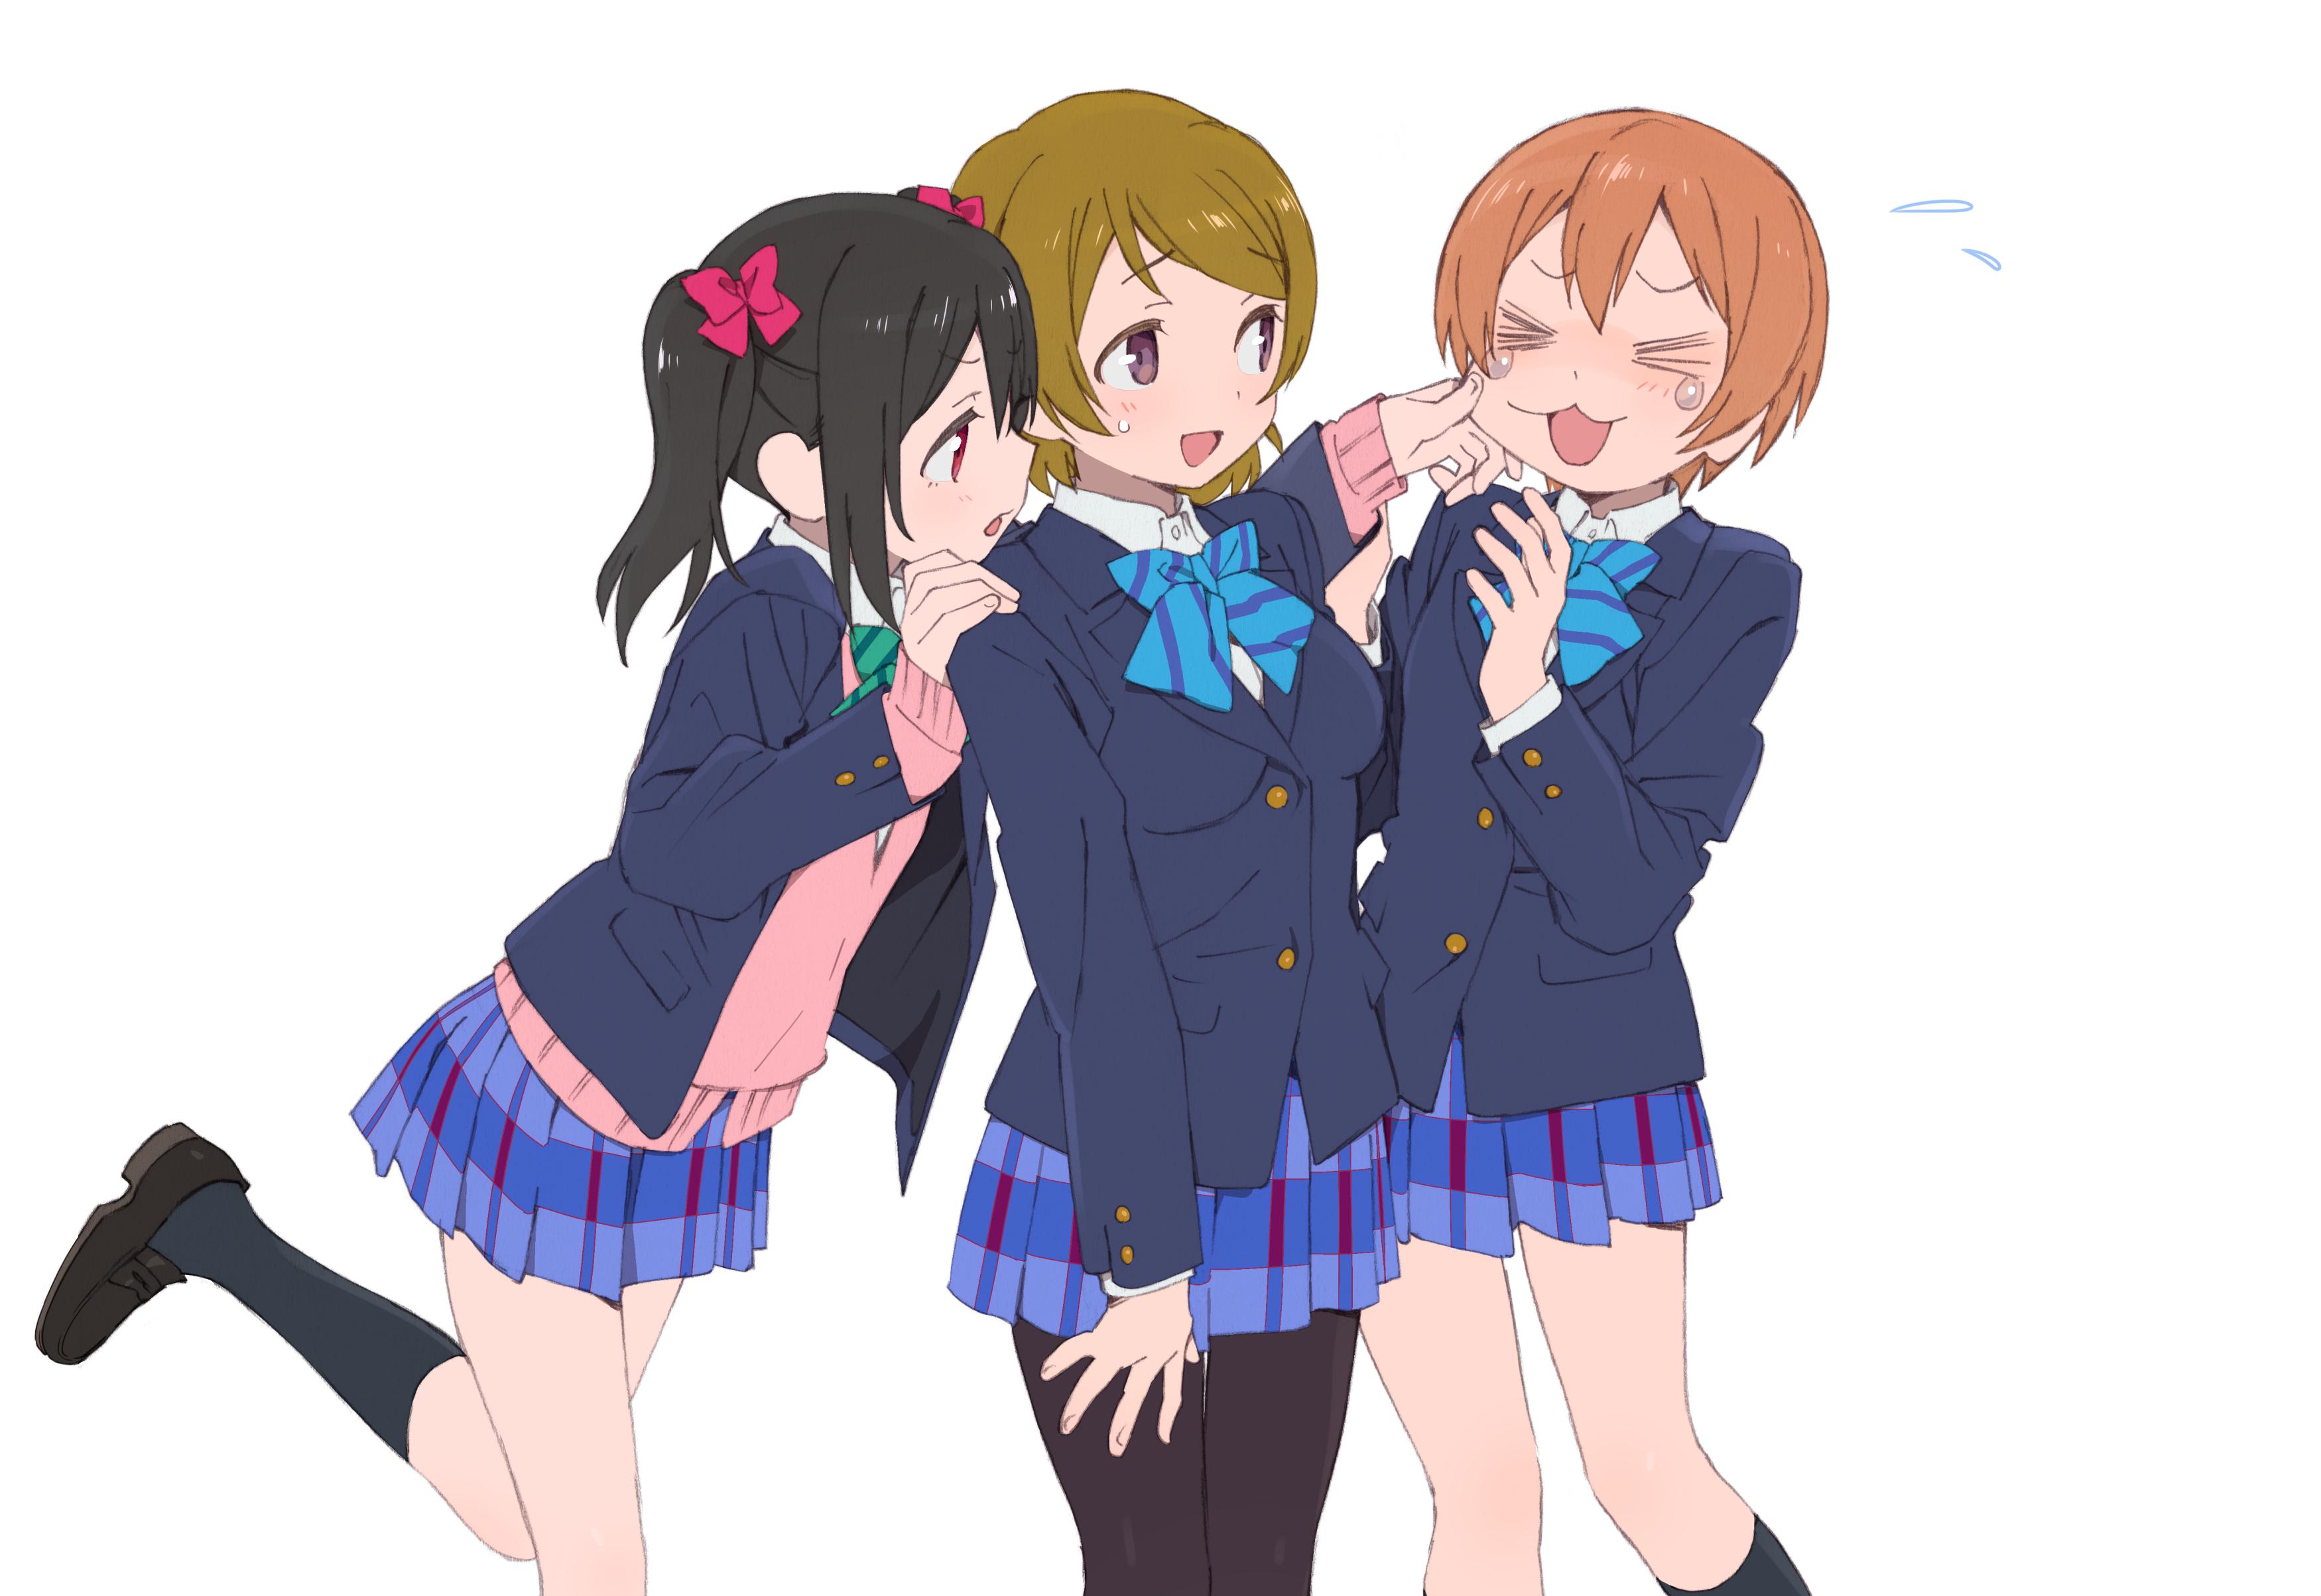 Download Wallpaper For 1024x600 Resolution Anime Girls Blushing 